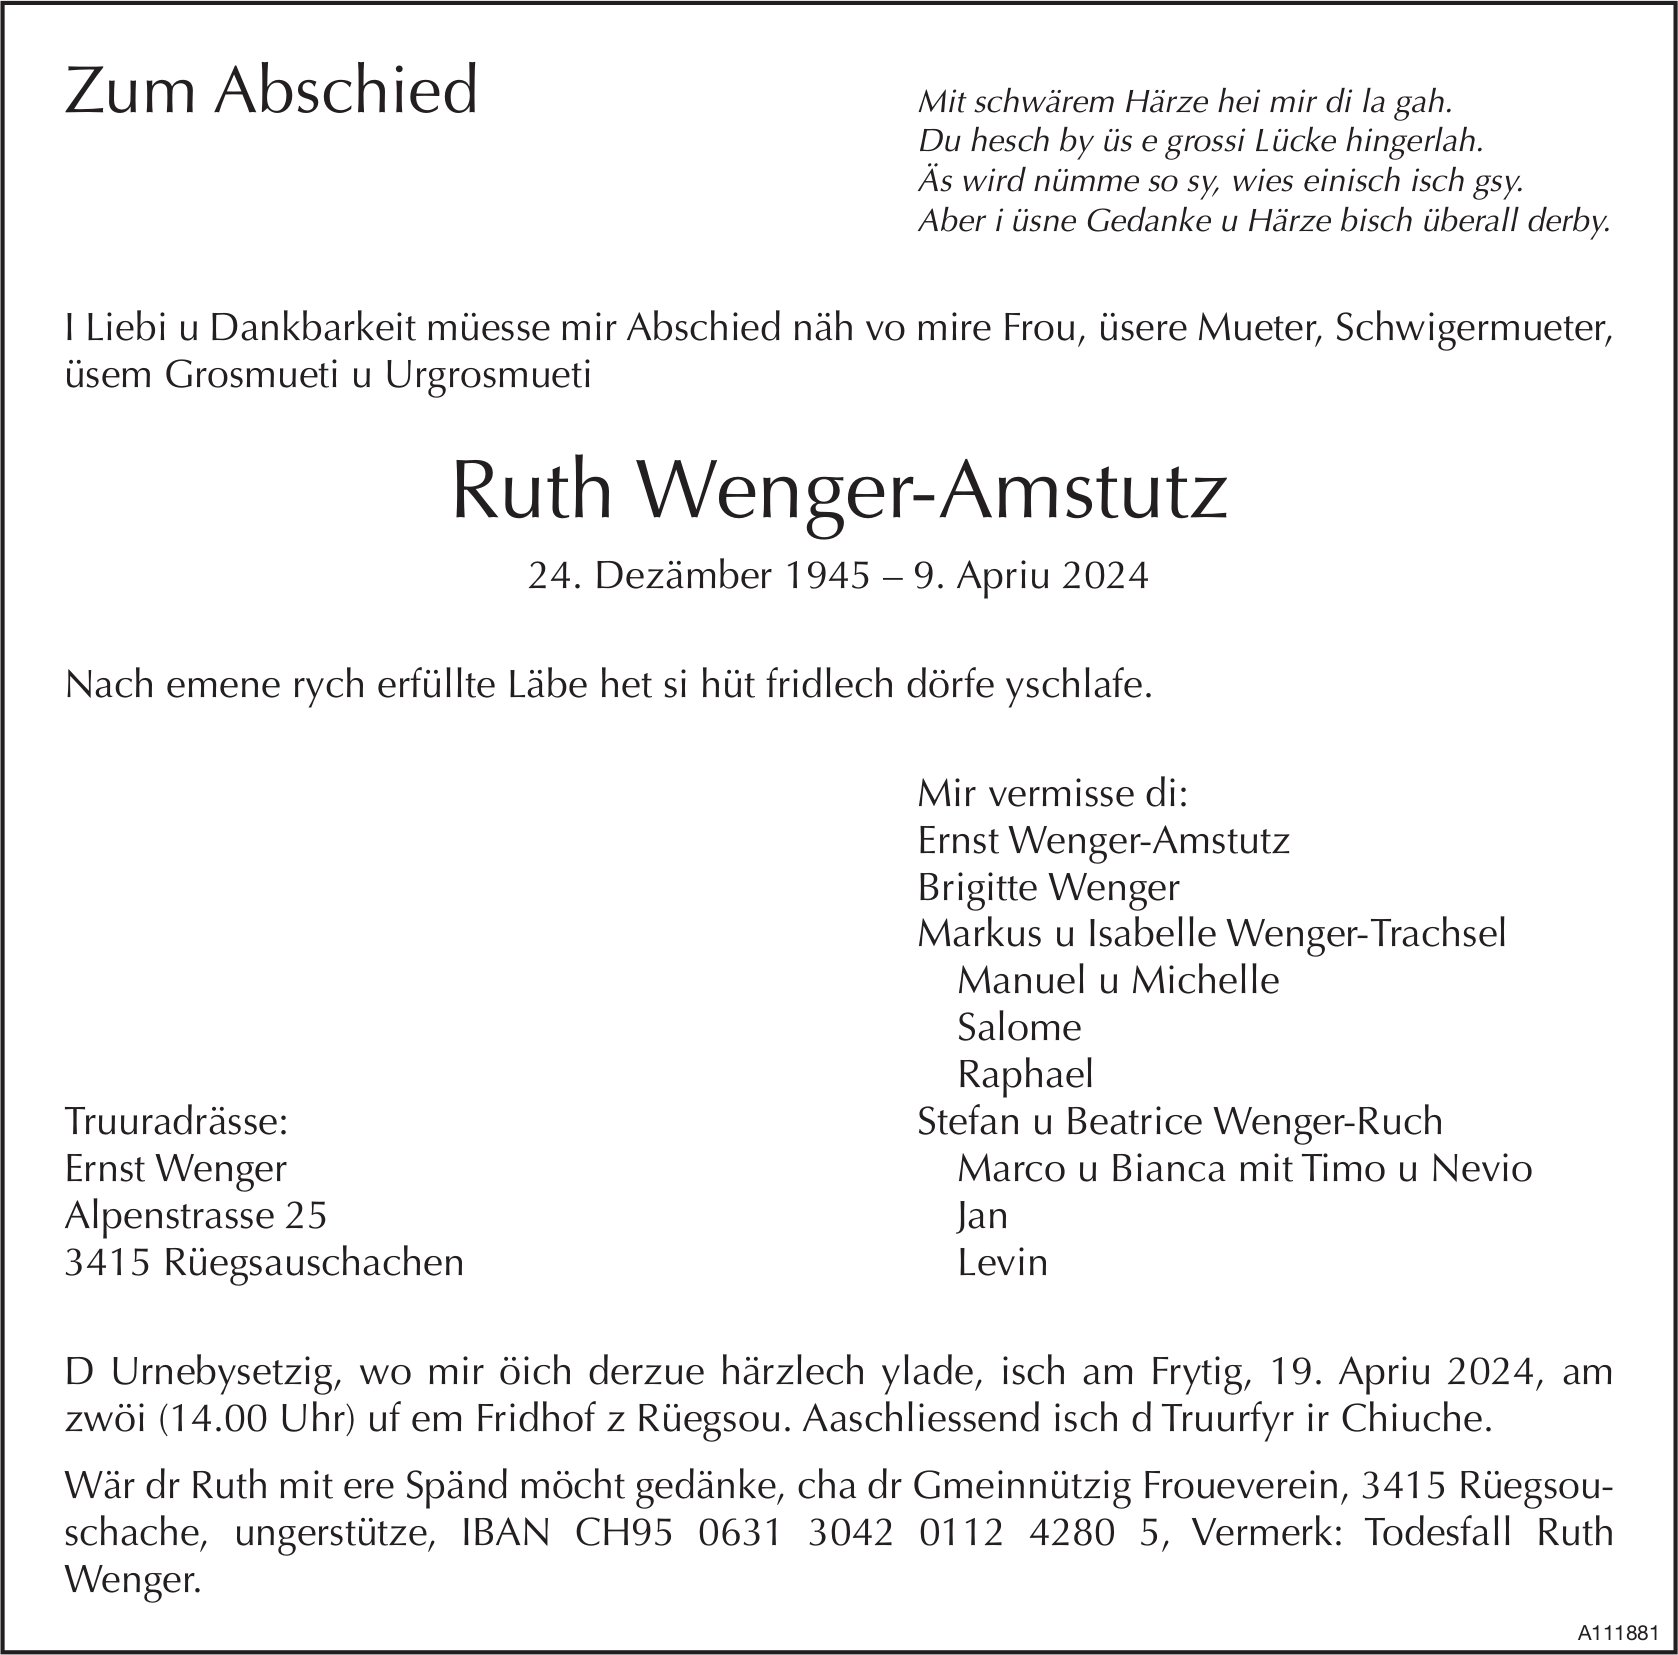 Ruth Wenger-Amstutz, April 2024 / TA